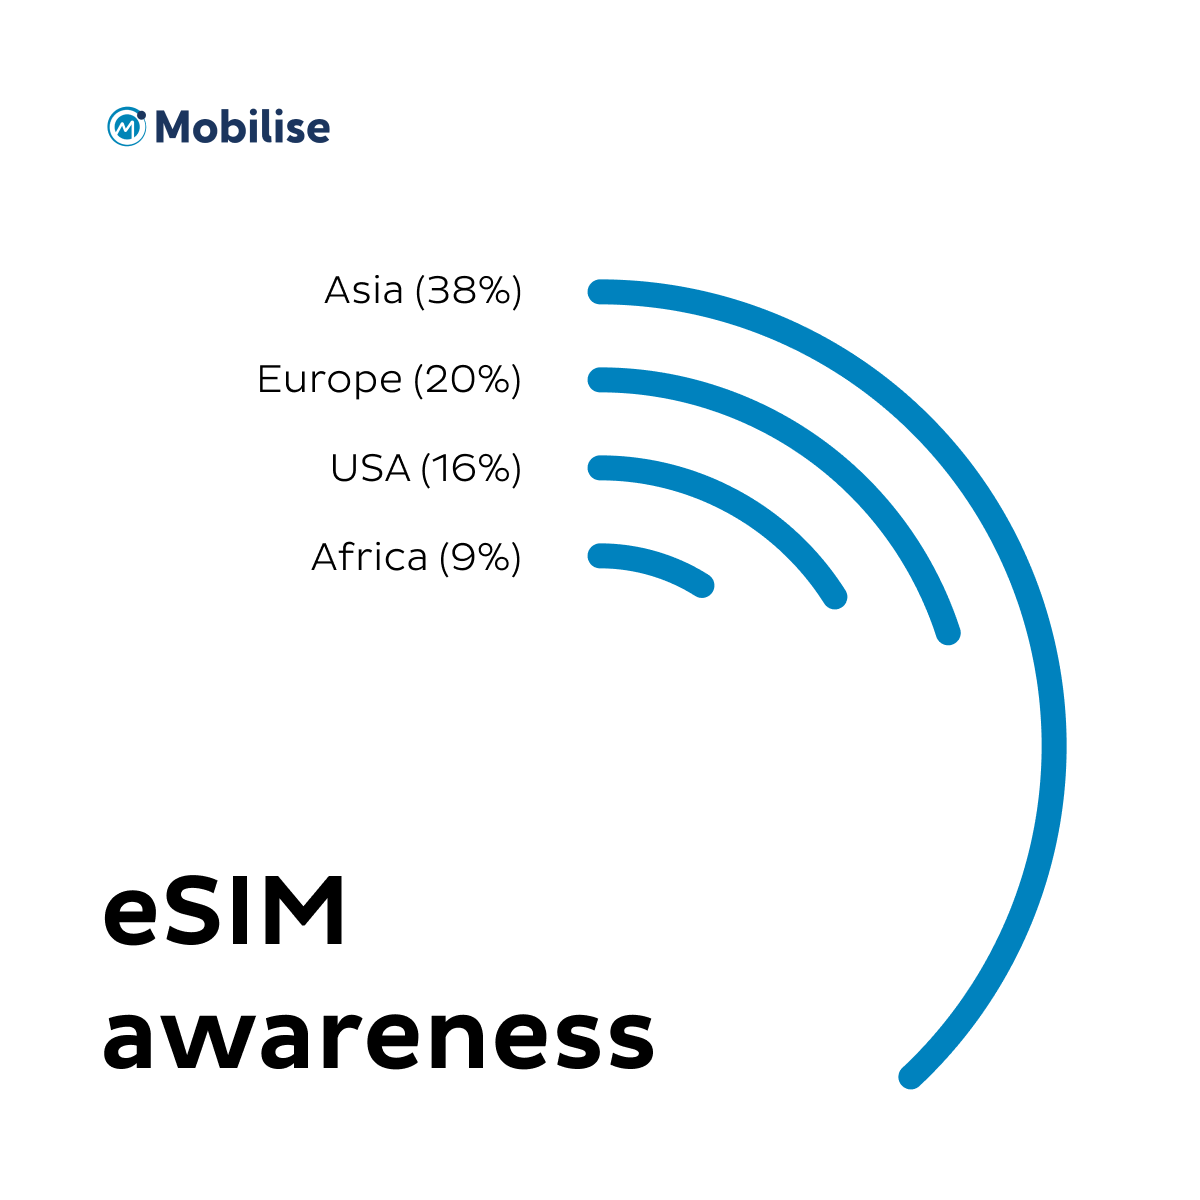 Infographic showing eSIM awareness